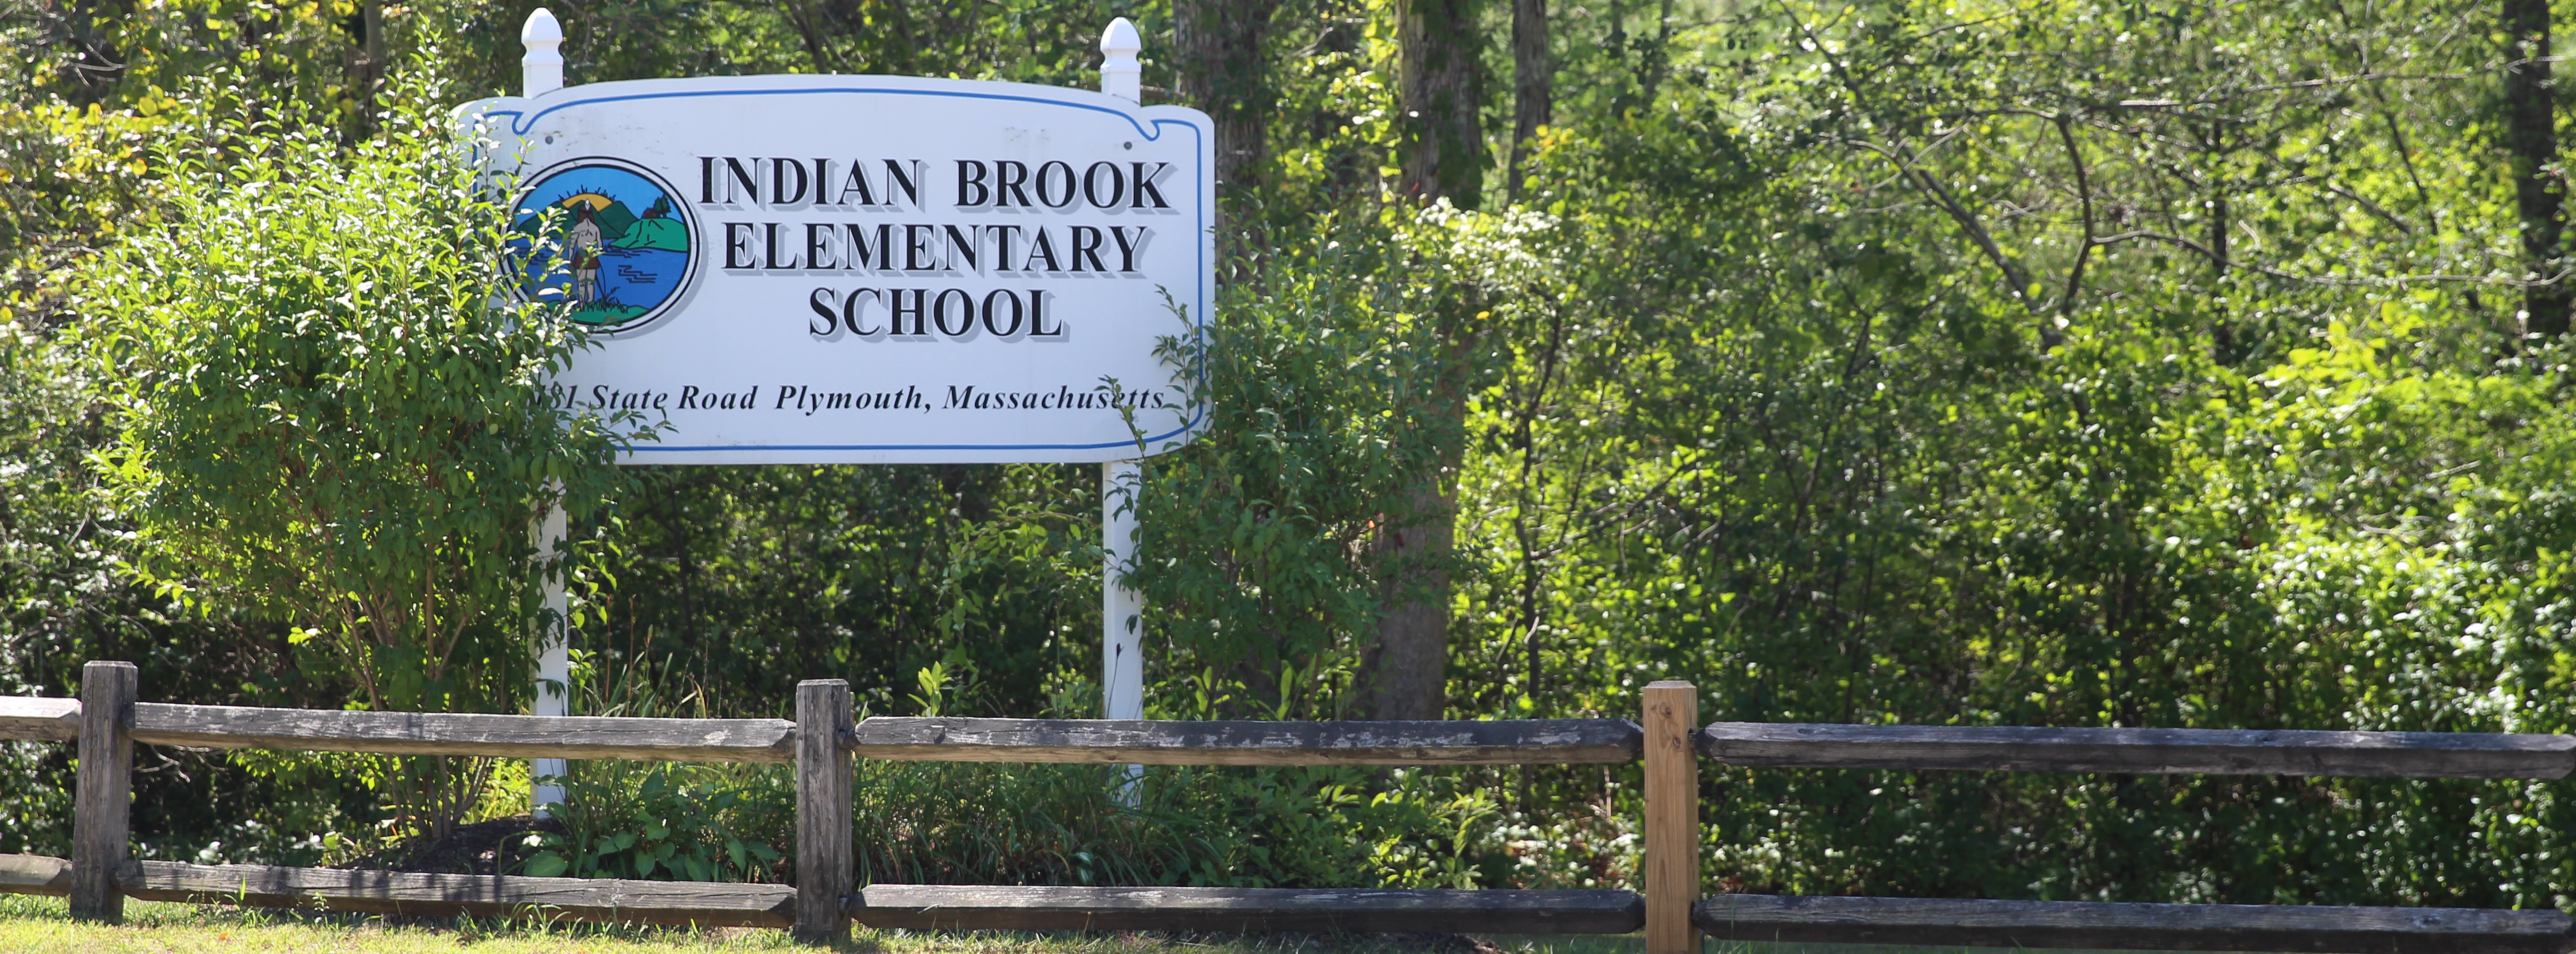 Indian Brook Elementary School